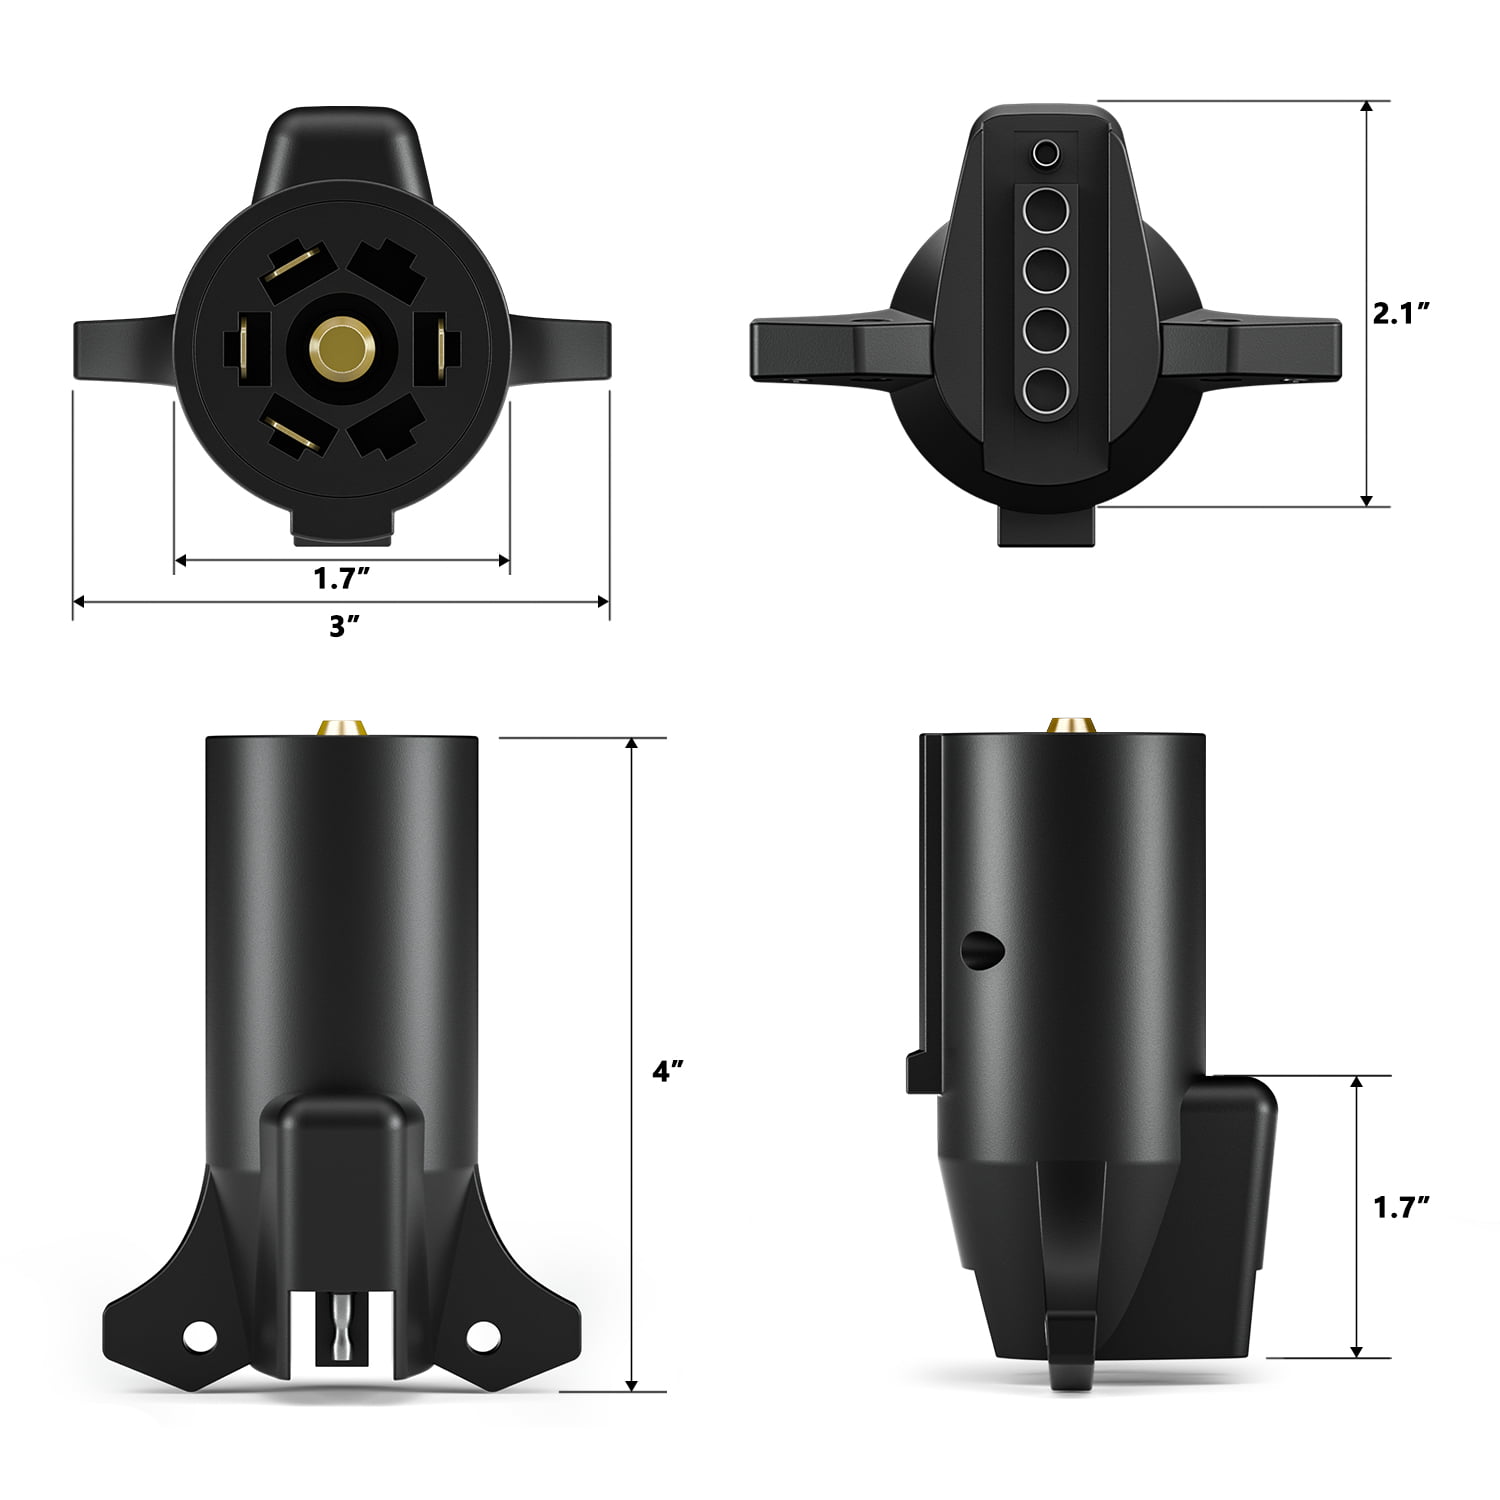 MICTUNING Heavy Duty 7 pin to 5 pin Trailer Adapter Plug Weatherproof